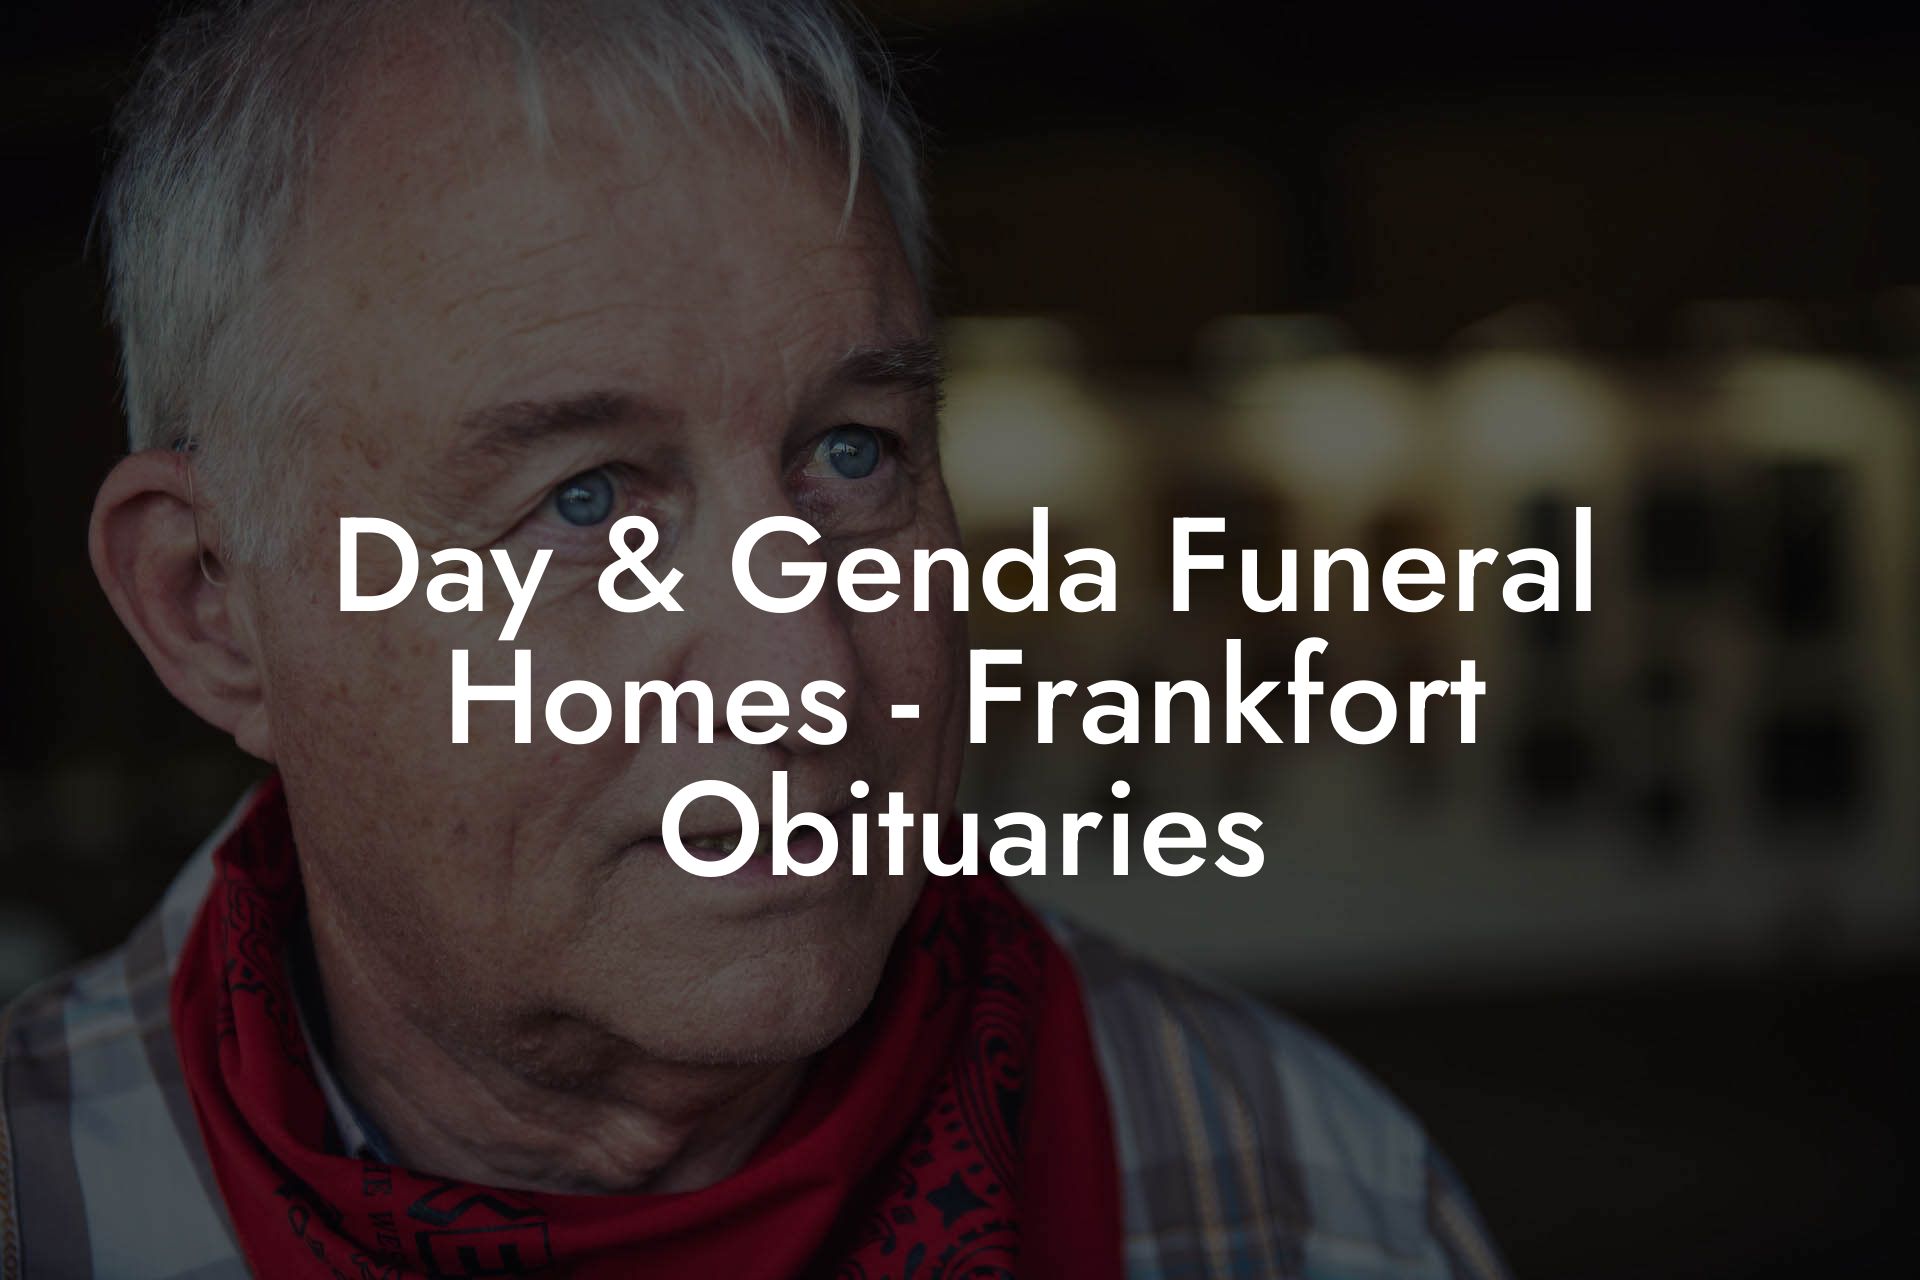 Day & Genda Funeral Homes - Frankfort Obituaries